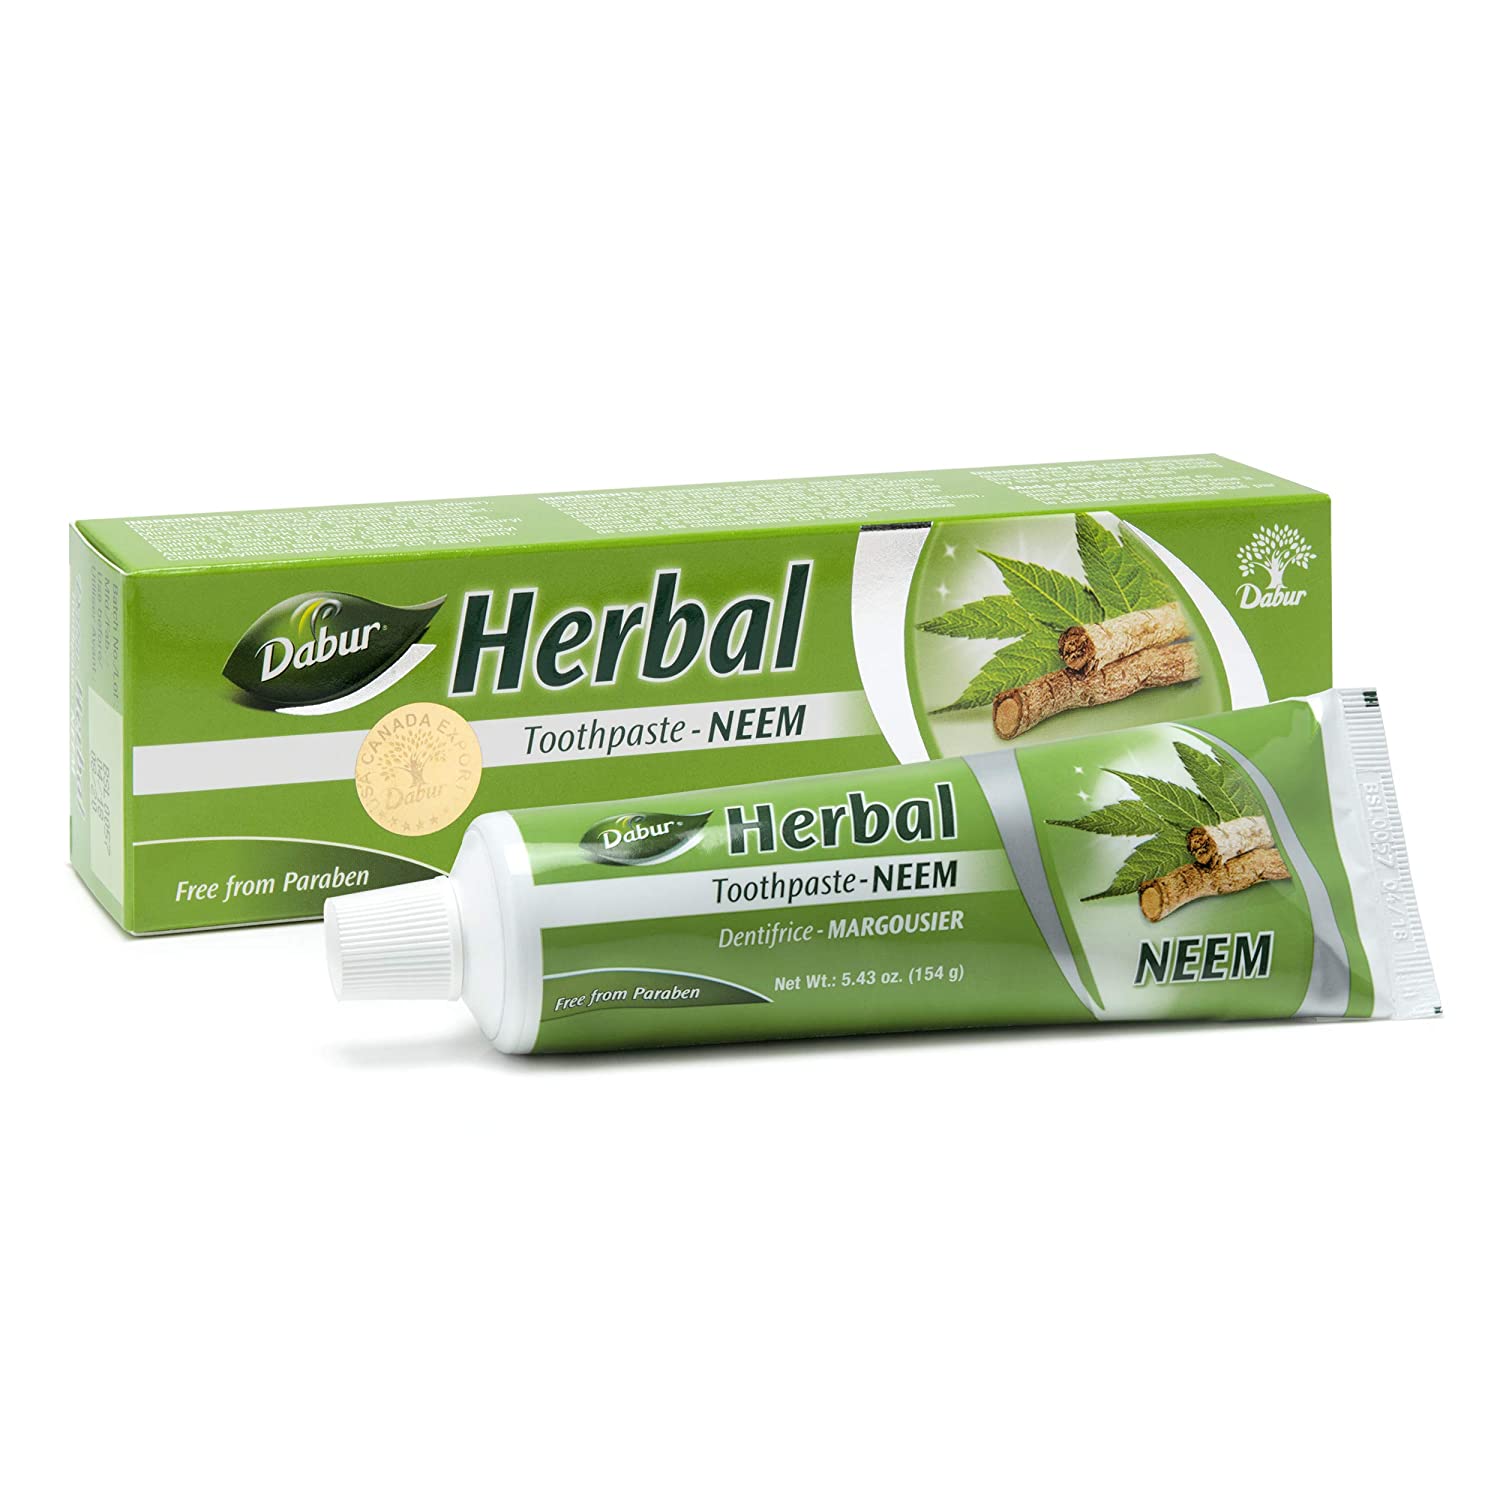 Dabur Herbal Neem Toothpaste 154g